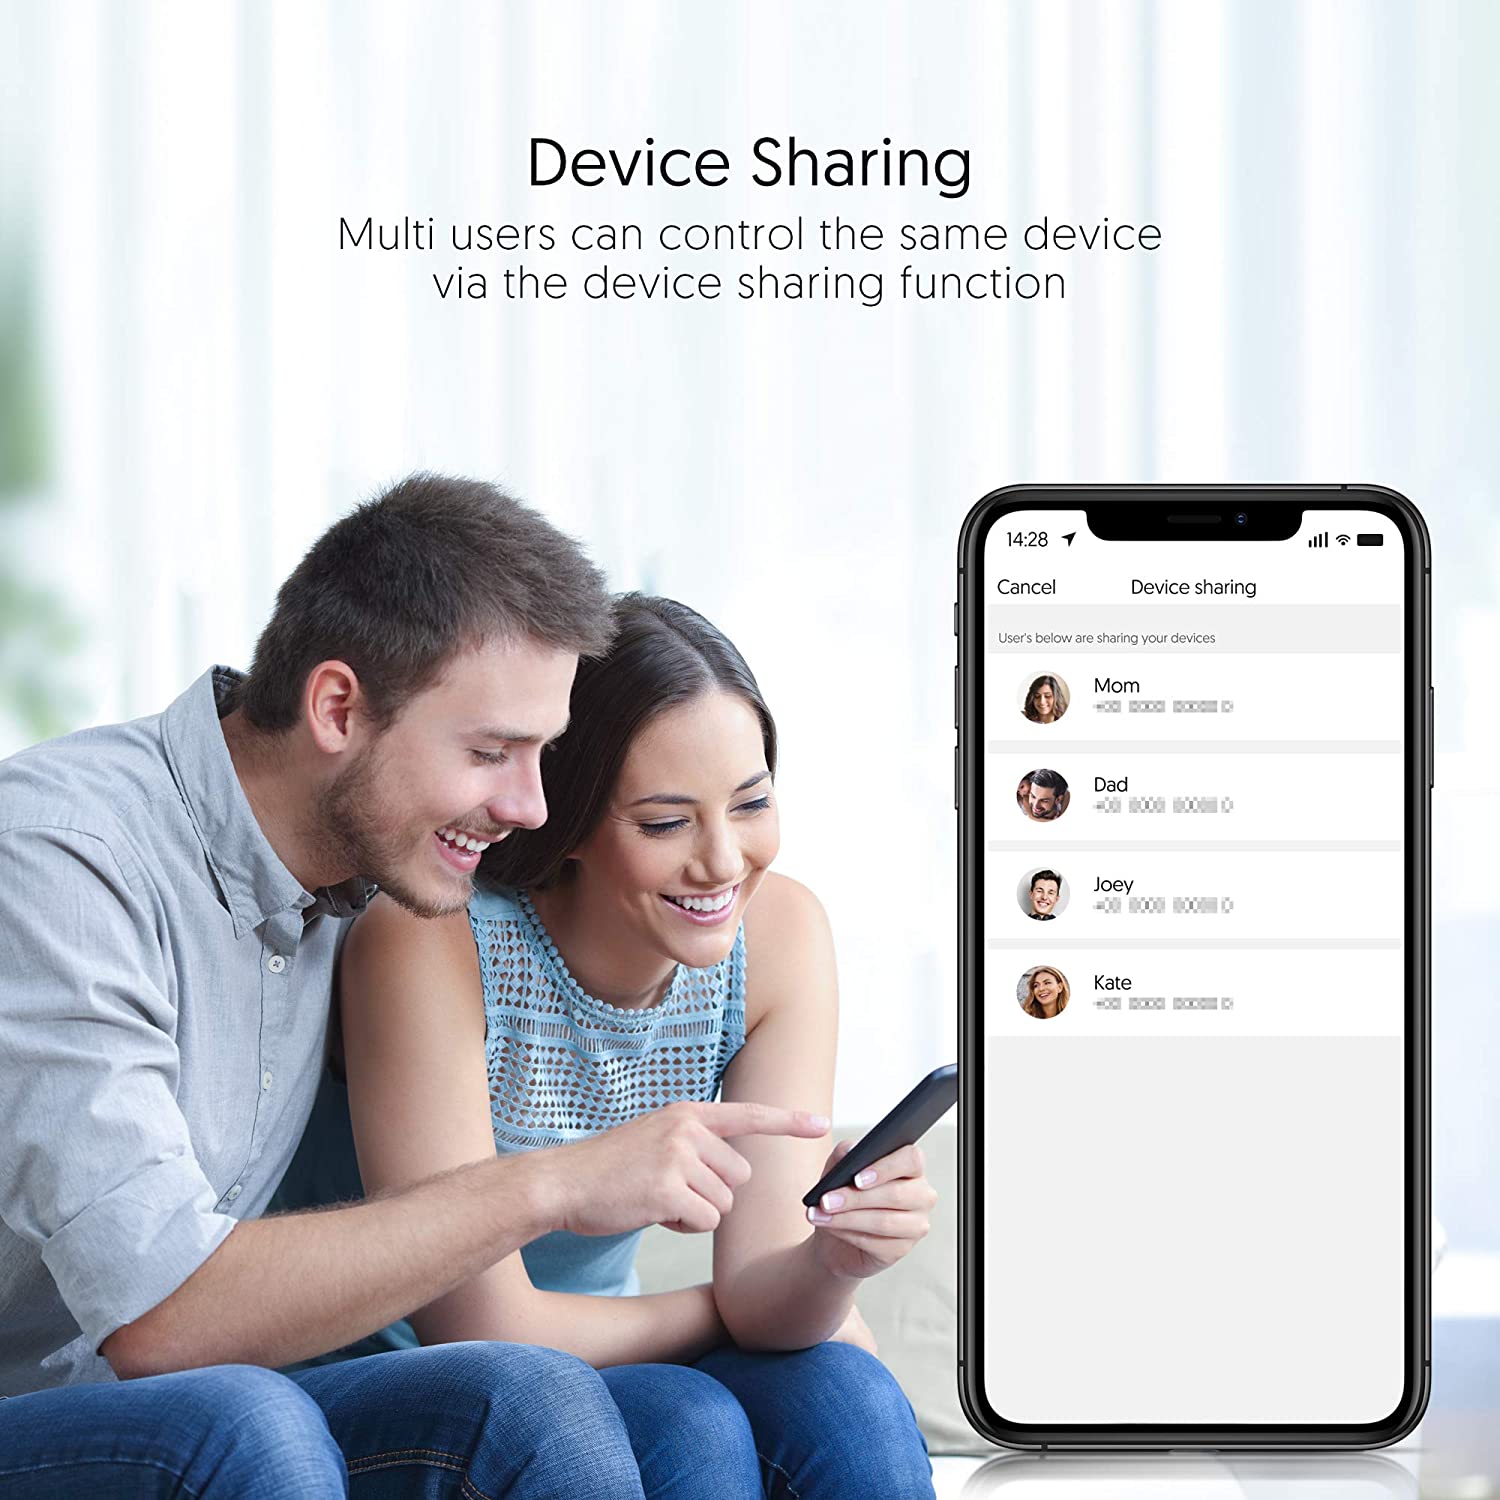 Device Sharing